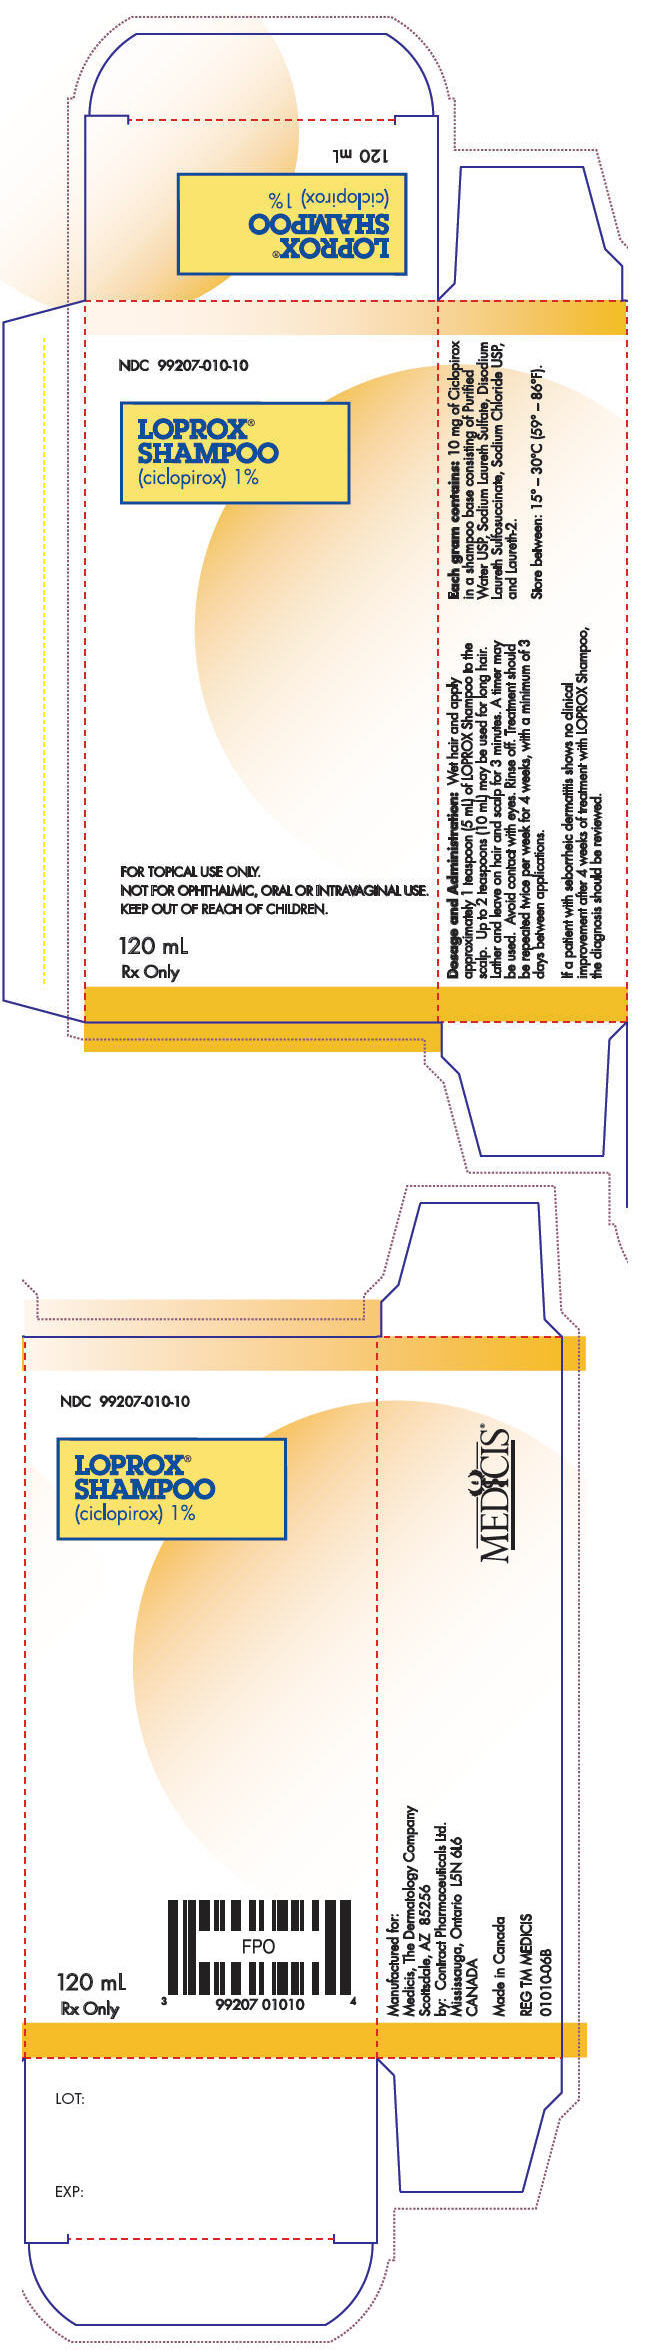 PRINCIPAL DISPLAY PANEL - 120 mL Carton